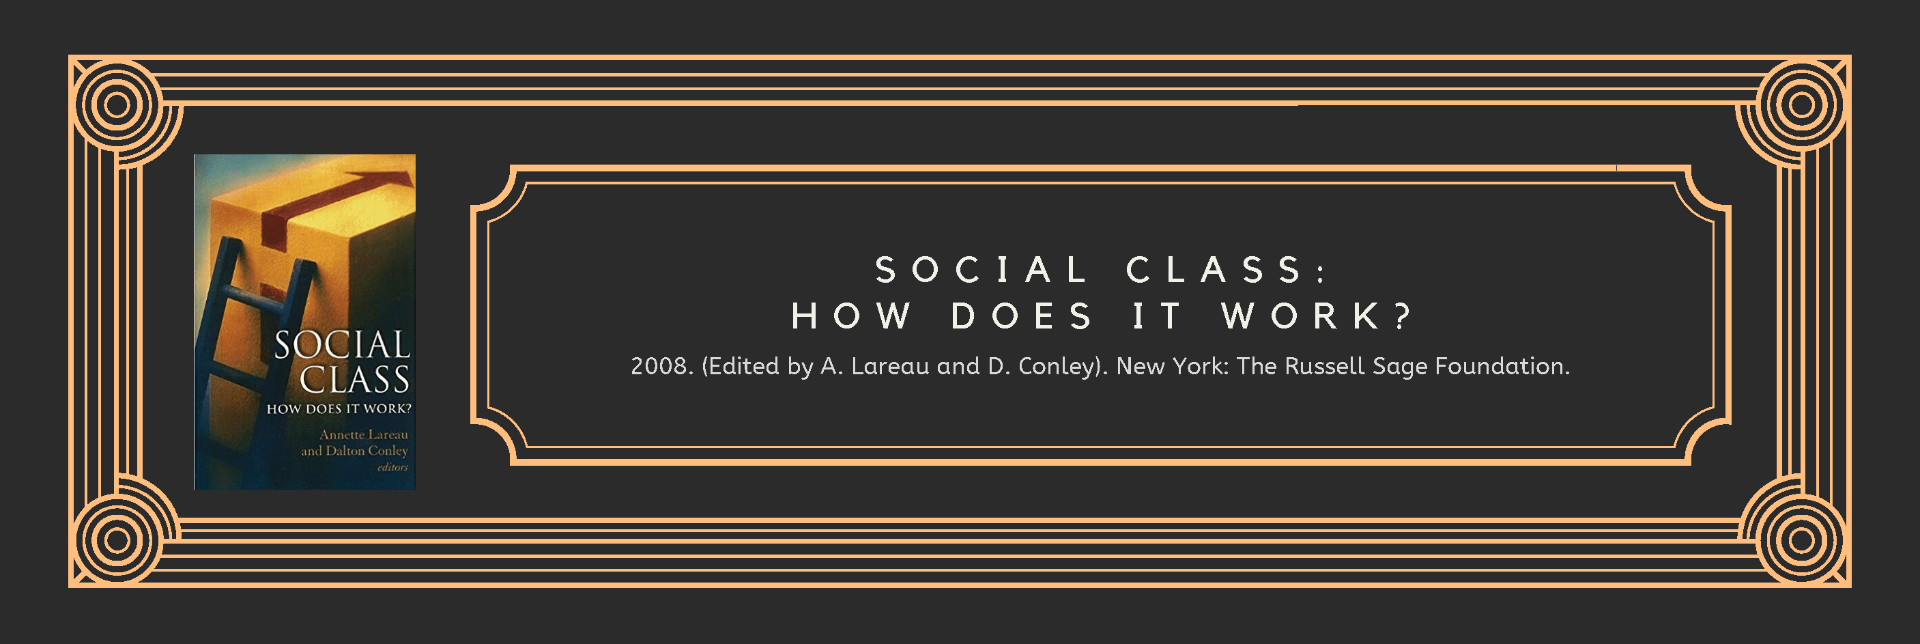 Social Class Book Citation and Link